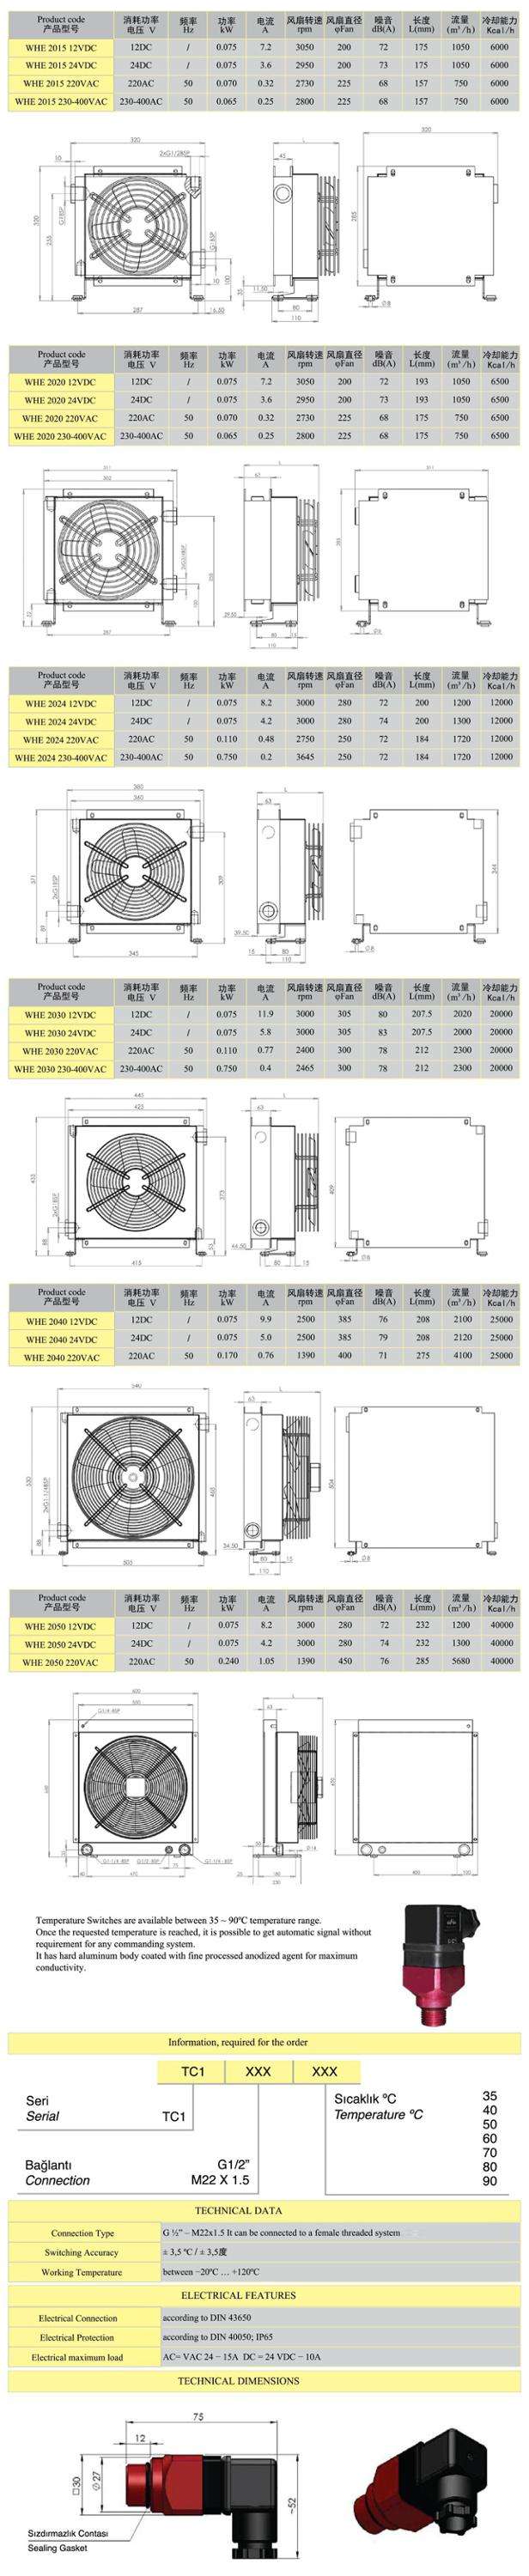 Unique products to buy cooling oil radiator aluminium excavator mini hydraulic fan oil cooler